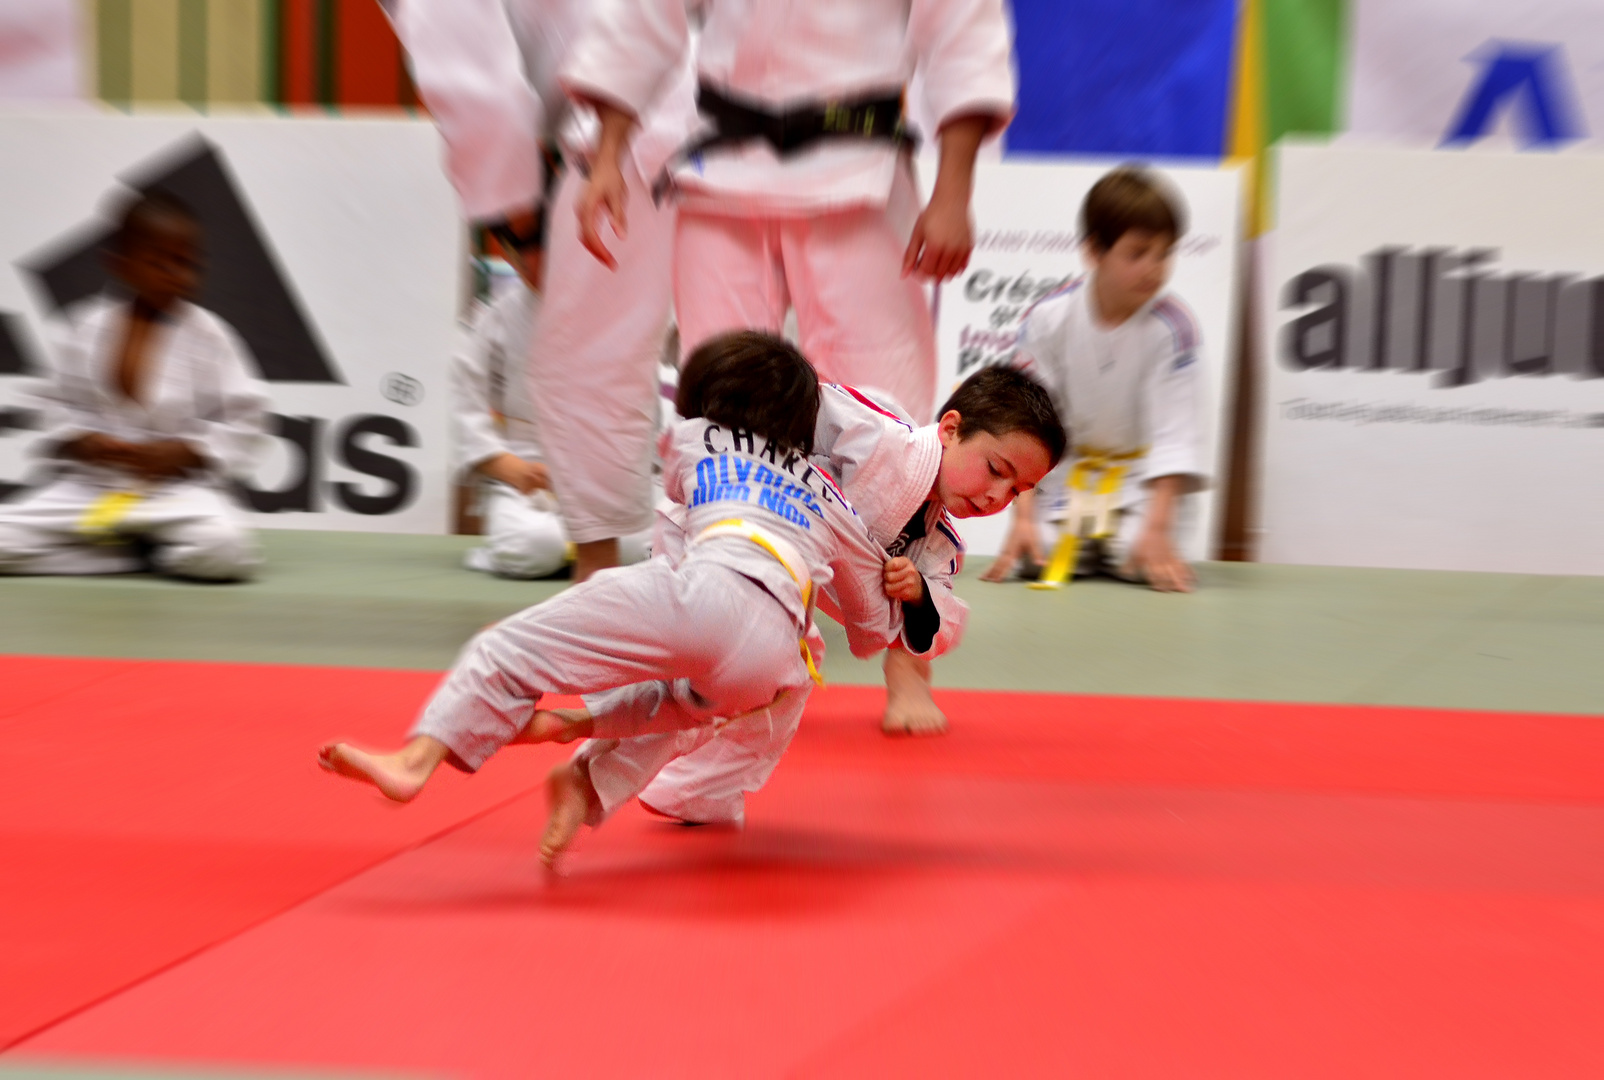 Mon judoka